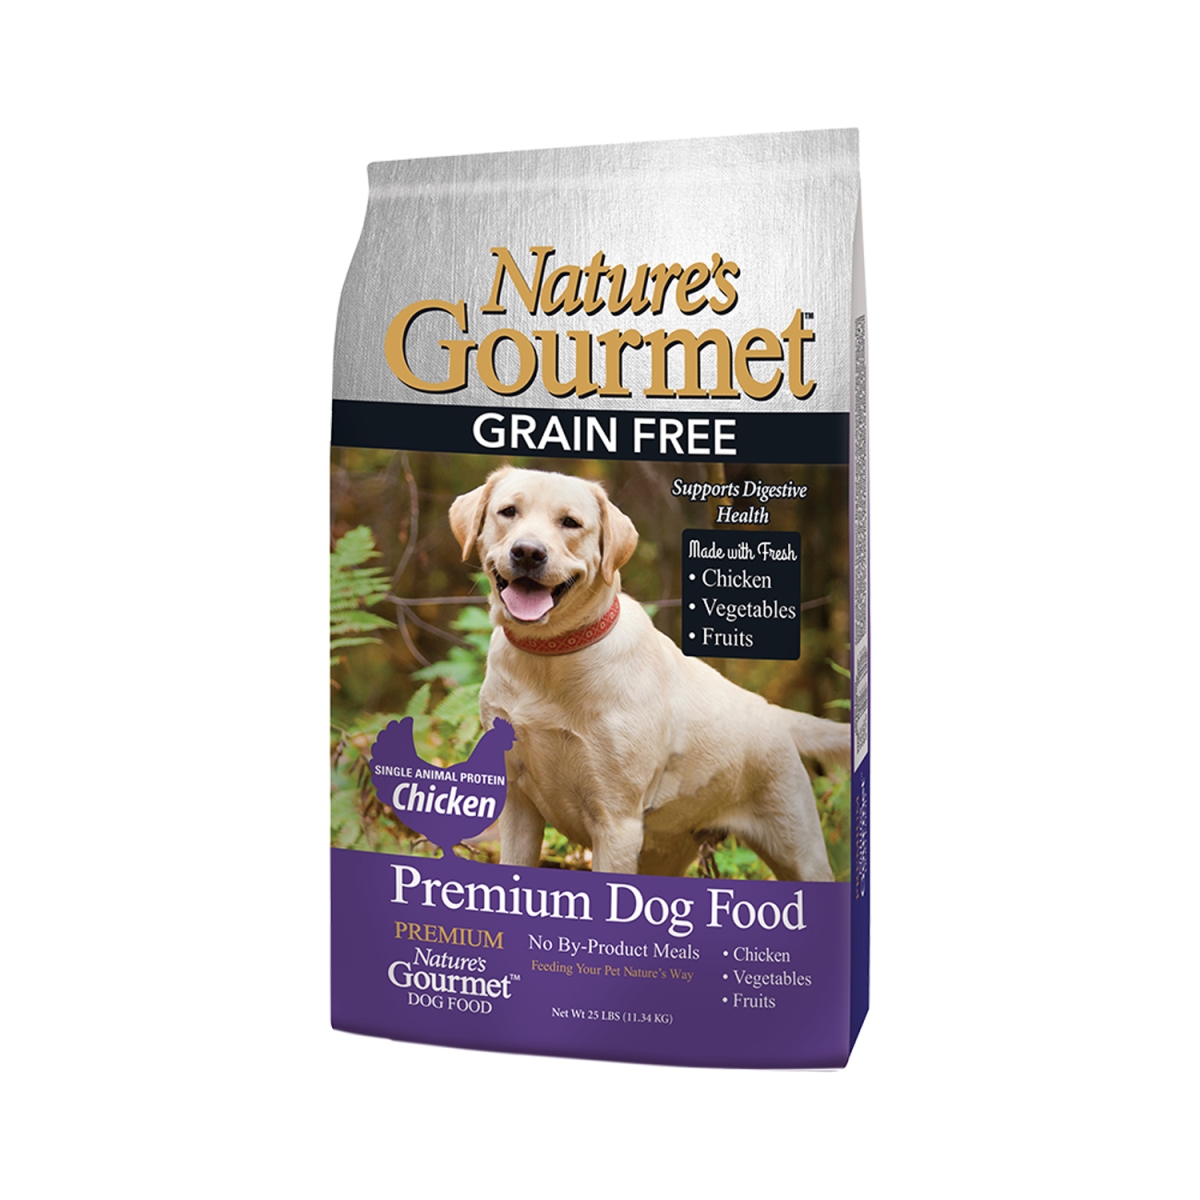 Ngdf-2500-01 25 Lbs Grain-free Adult Dog Food, Chicken